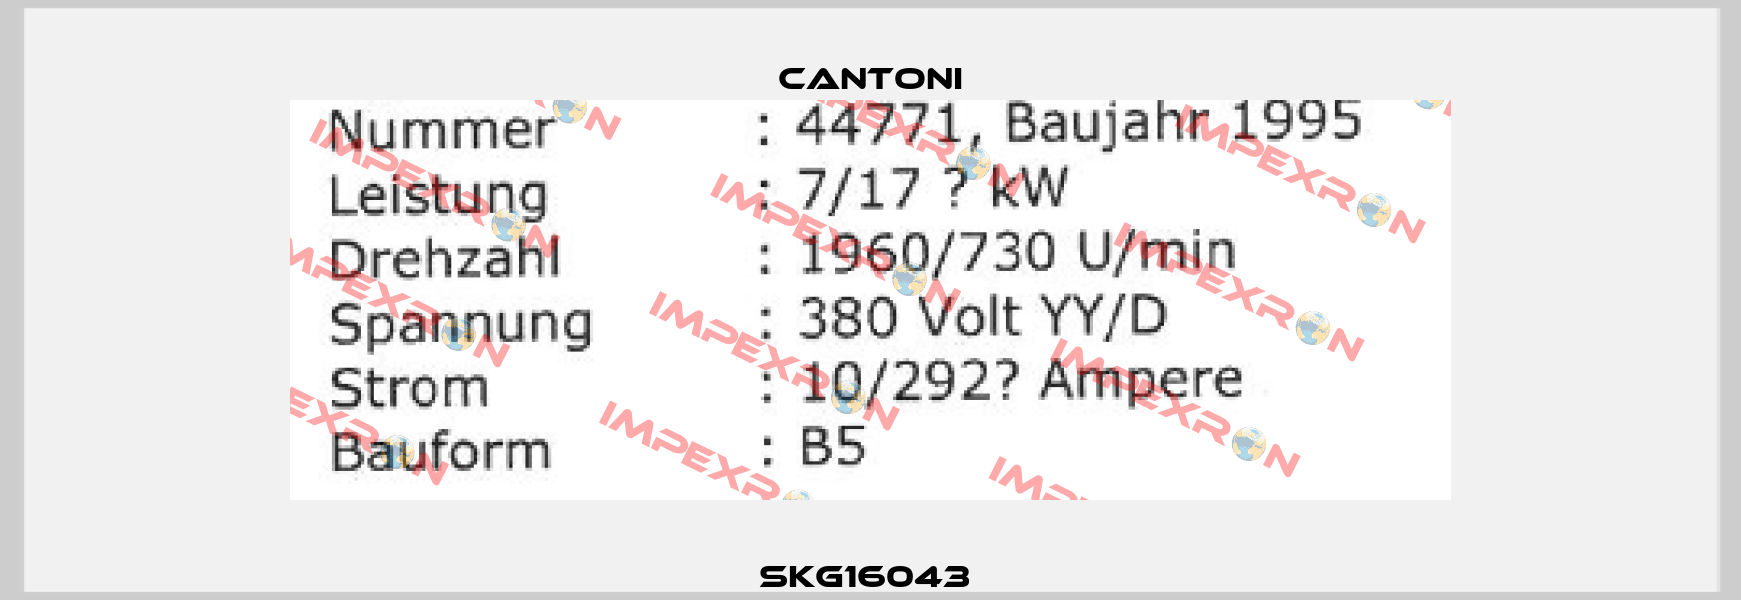 SKG16043  Cantoni